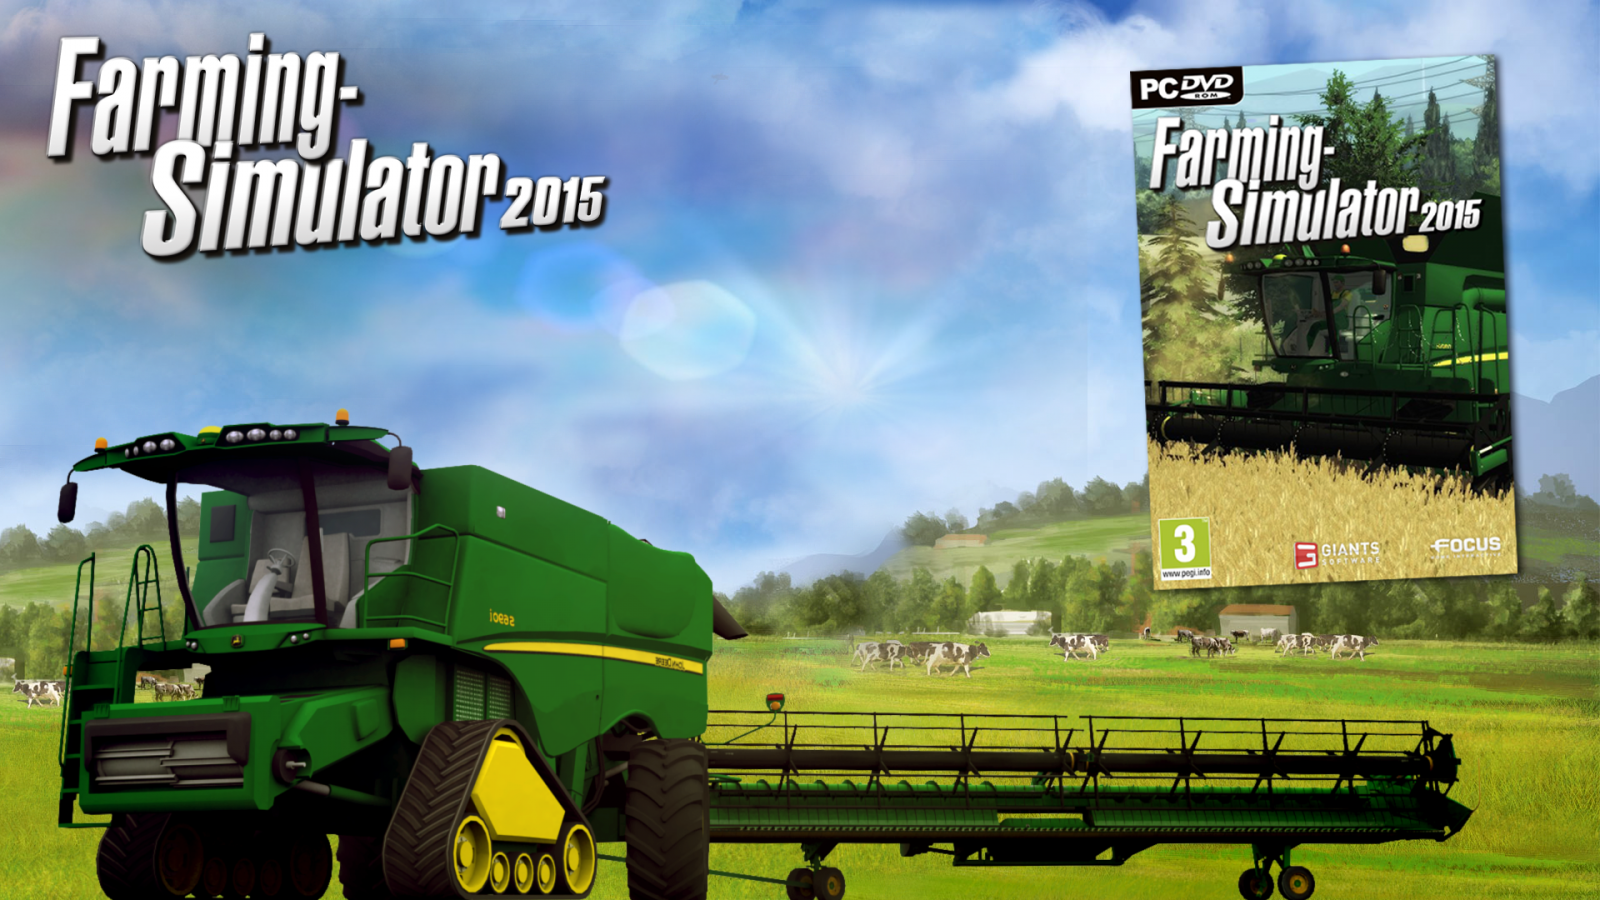 download steam farming simulator 13 for free